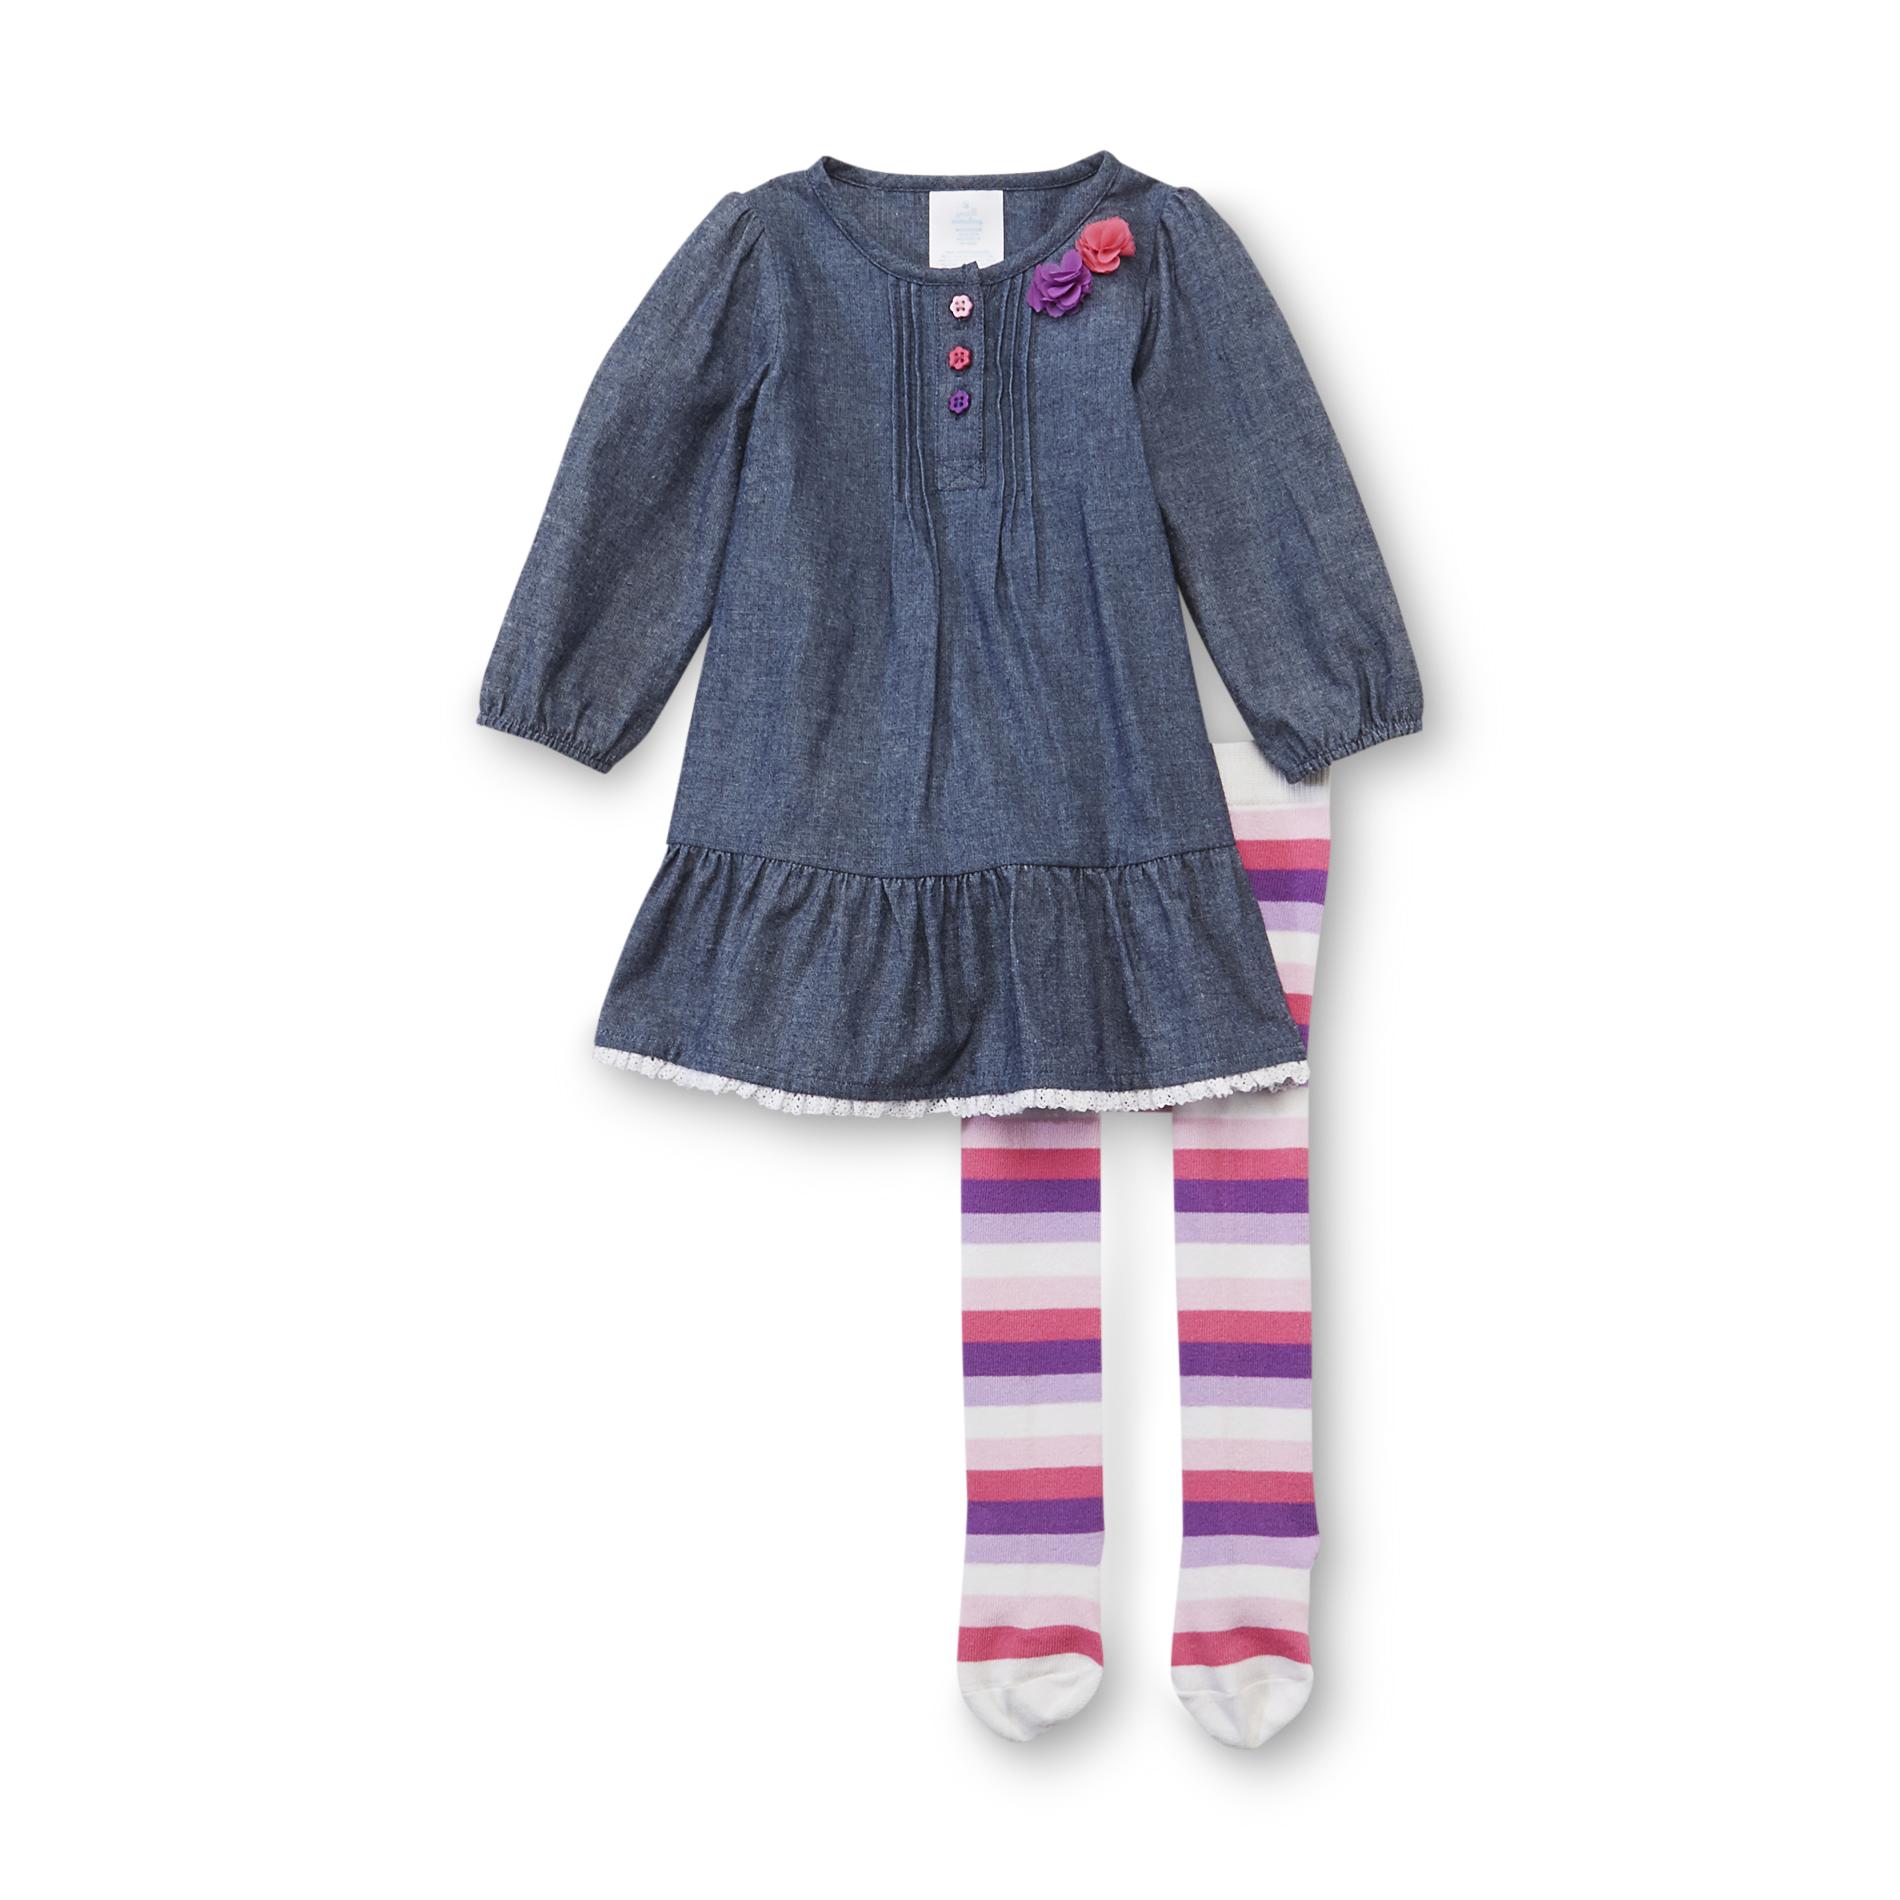 Small Wonders Newborn Girl's Chambray Dress & Tights - Striped